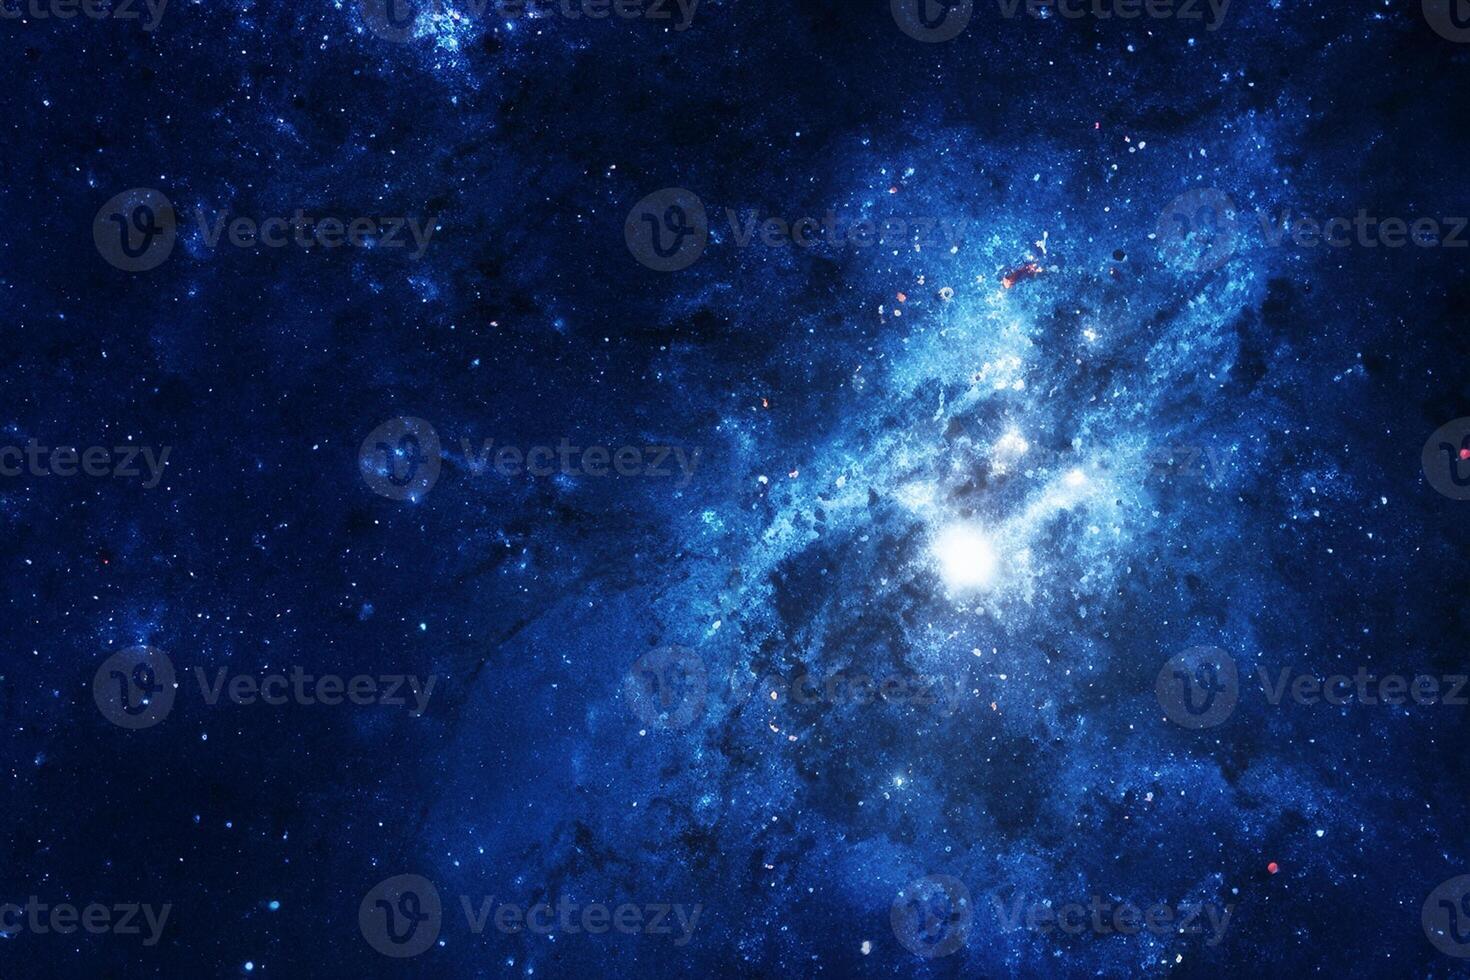 blu spirale galassia. elementi di Questo Immagine arredato di nasa foto